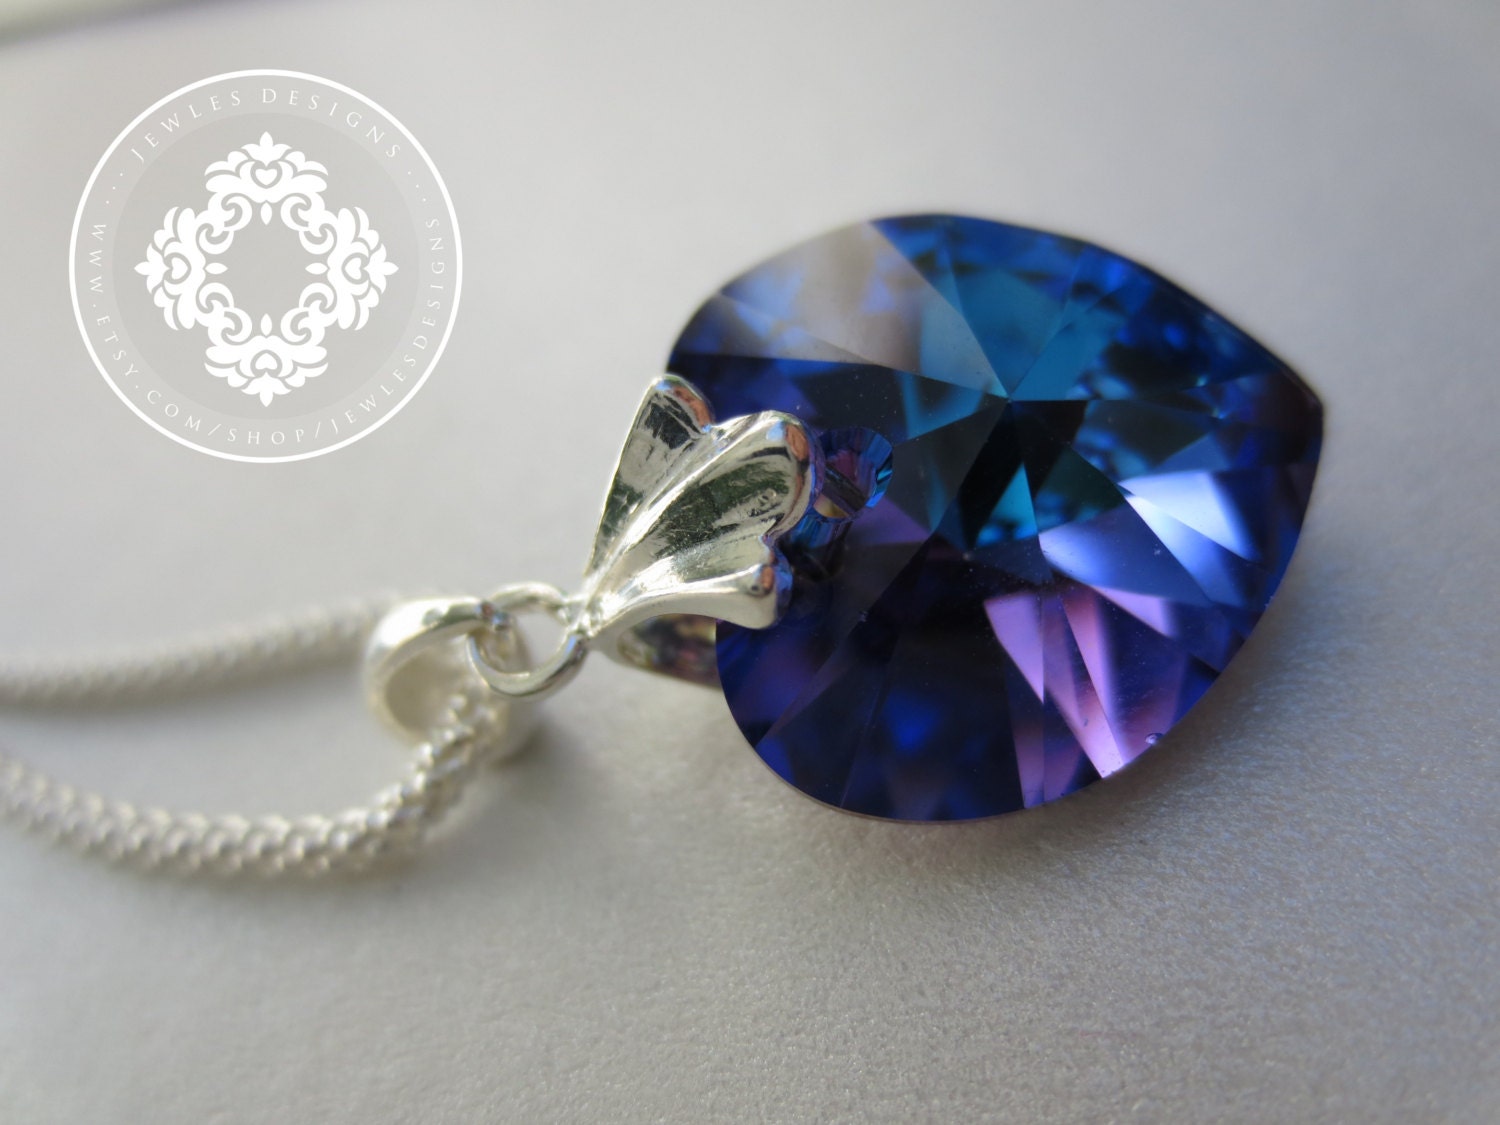 Swarovski Crystal necklace women's accessories by JewlesDesigns